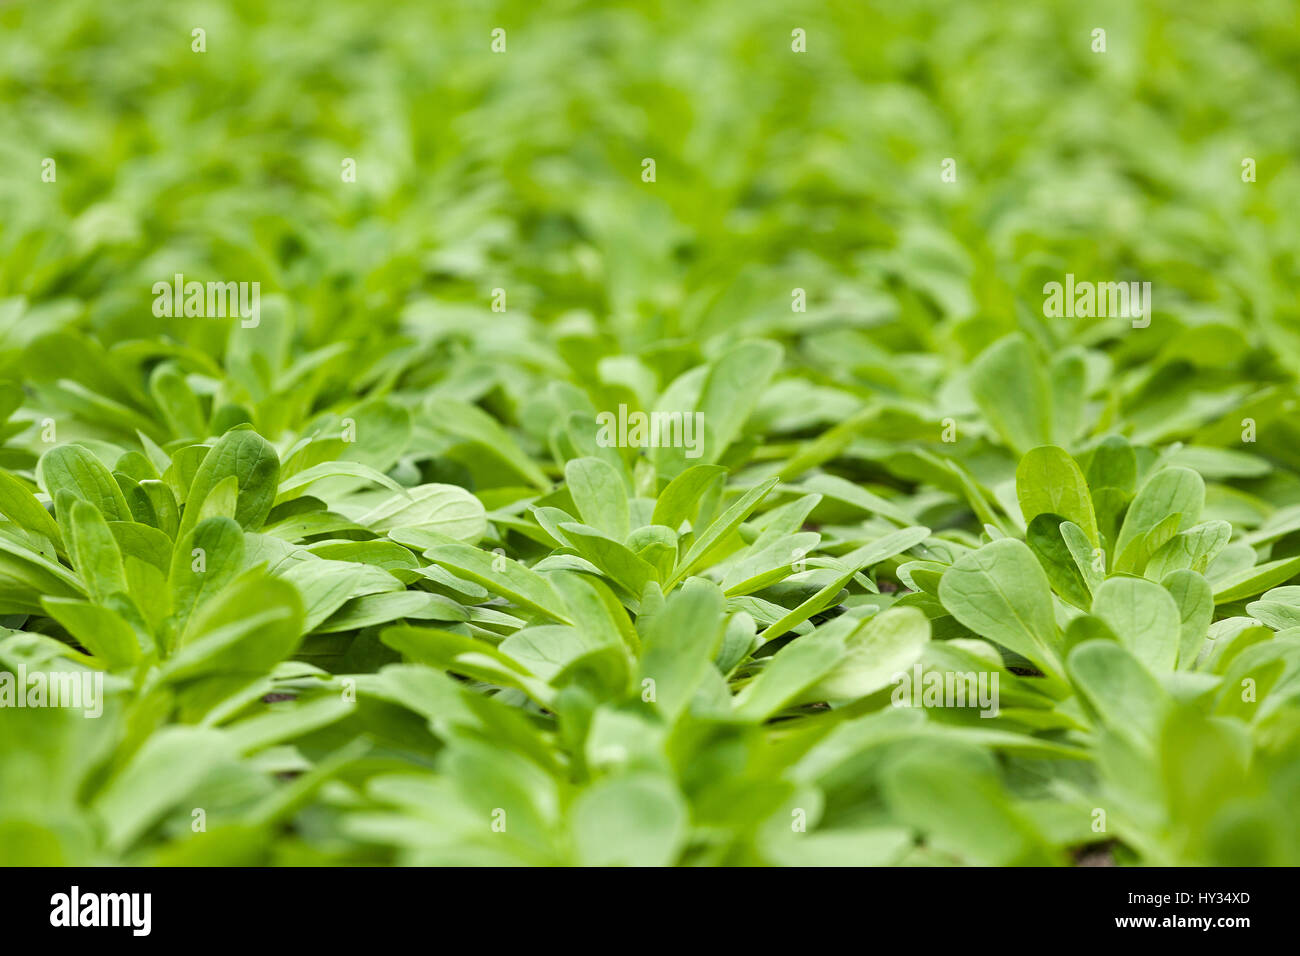 Close up des aliments issus de la culture du maïs en salade - Valerianella locusta - cultiver en serre ou sous serre. Banque D'Images